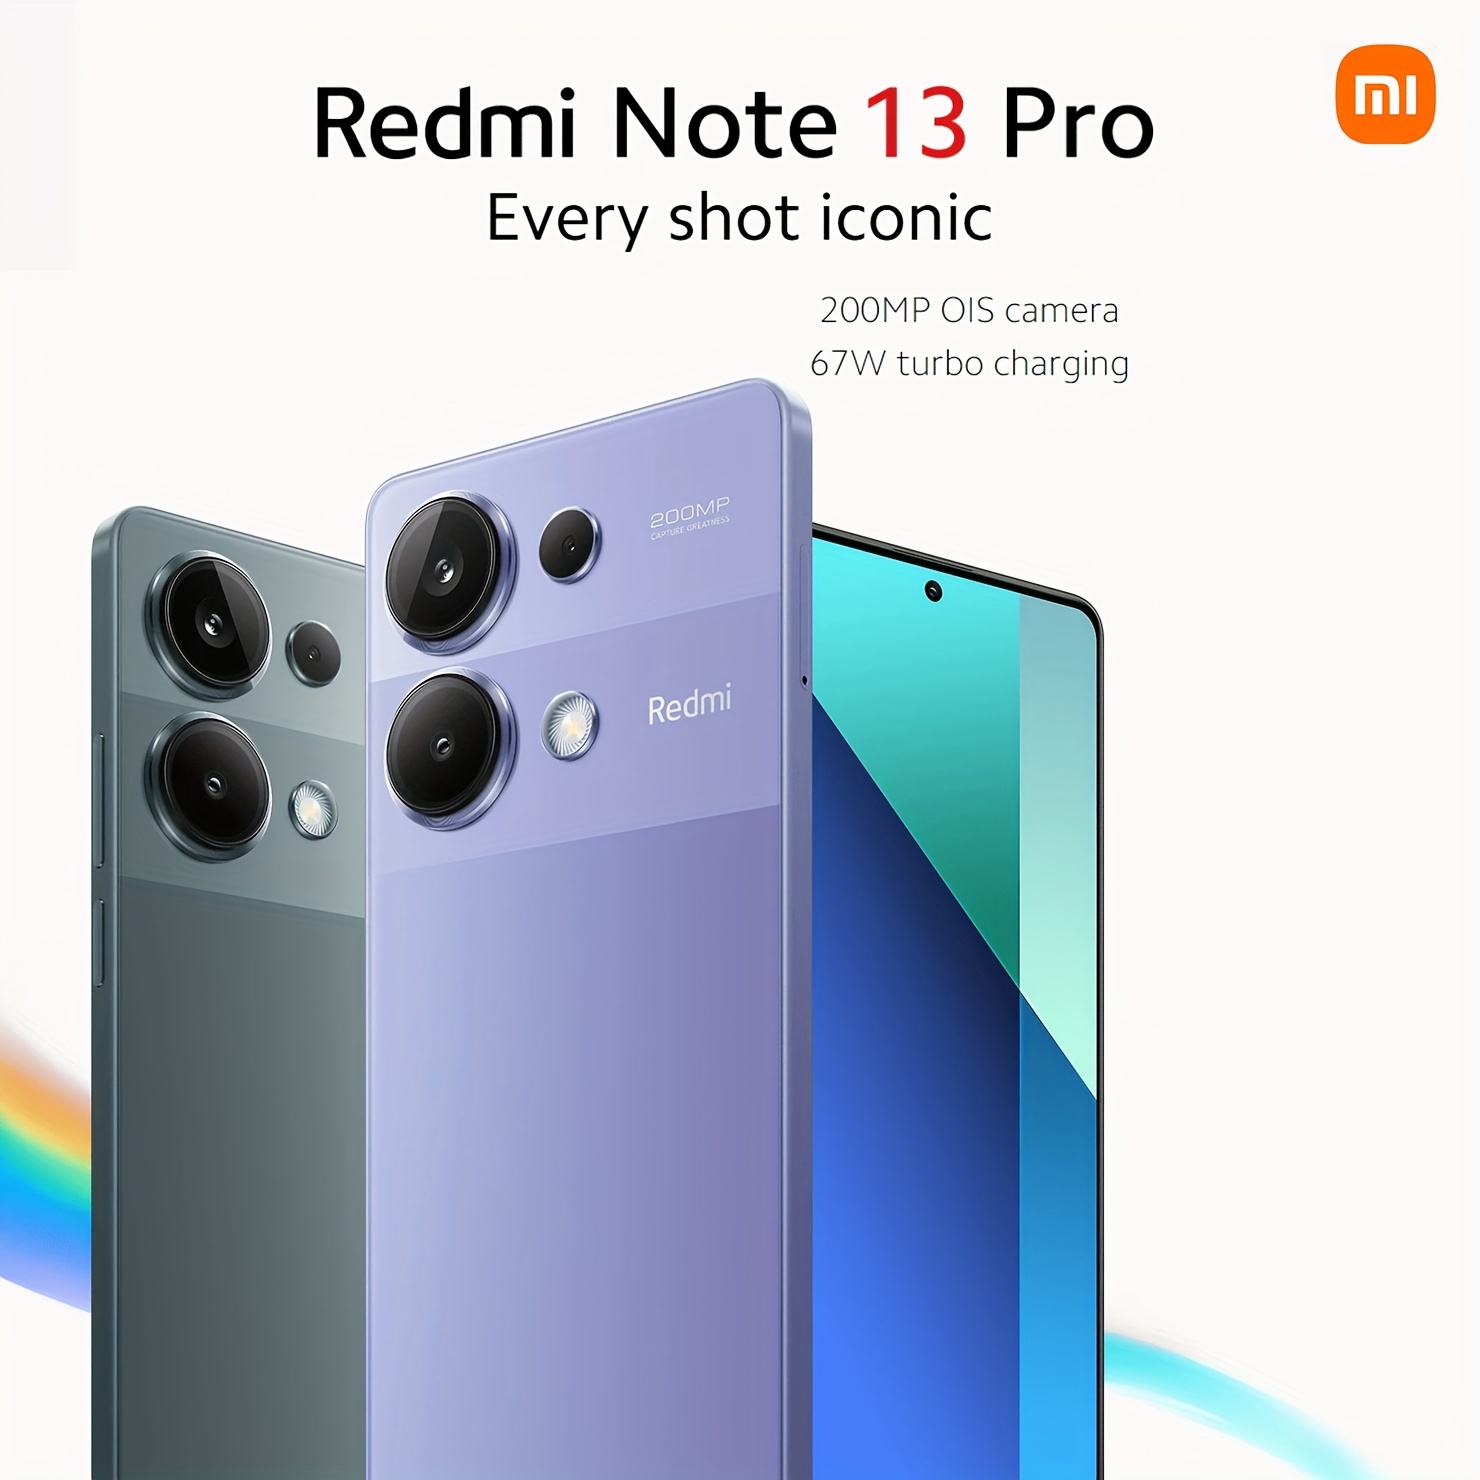 Xiaomi Redmi Note 13 Pro 5G Smartphone 6.67 Snapdragon 7S Gen 2 5100mAh  Battery 67W Fast Charging 200 MP